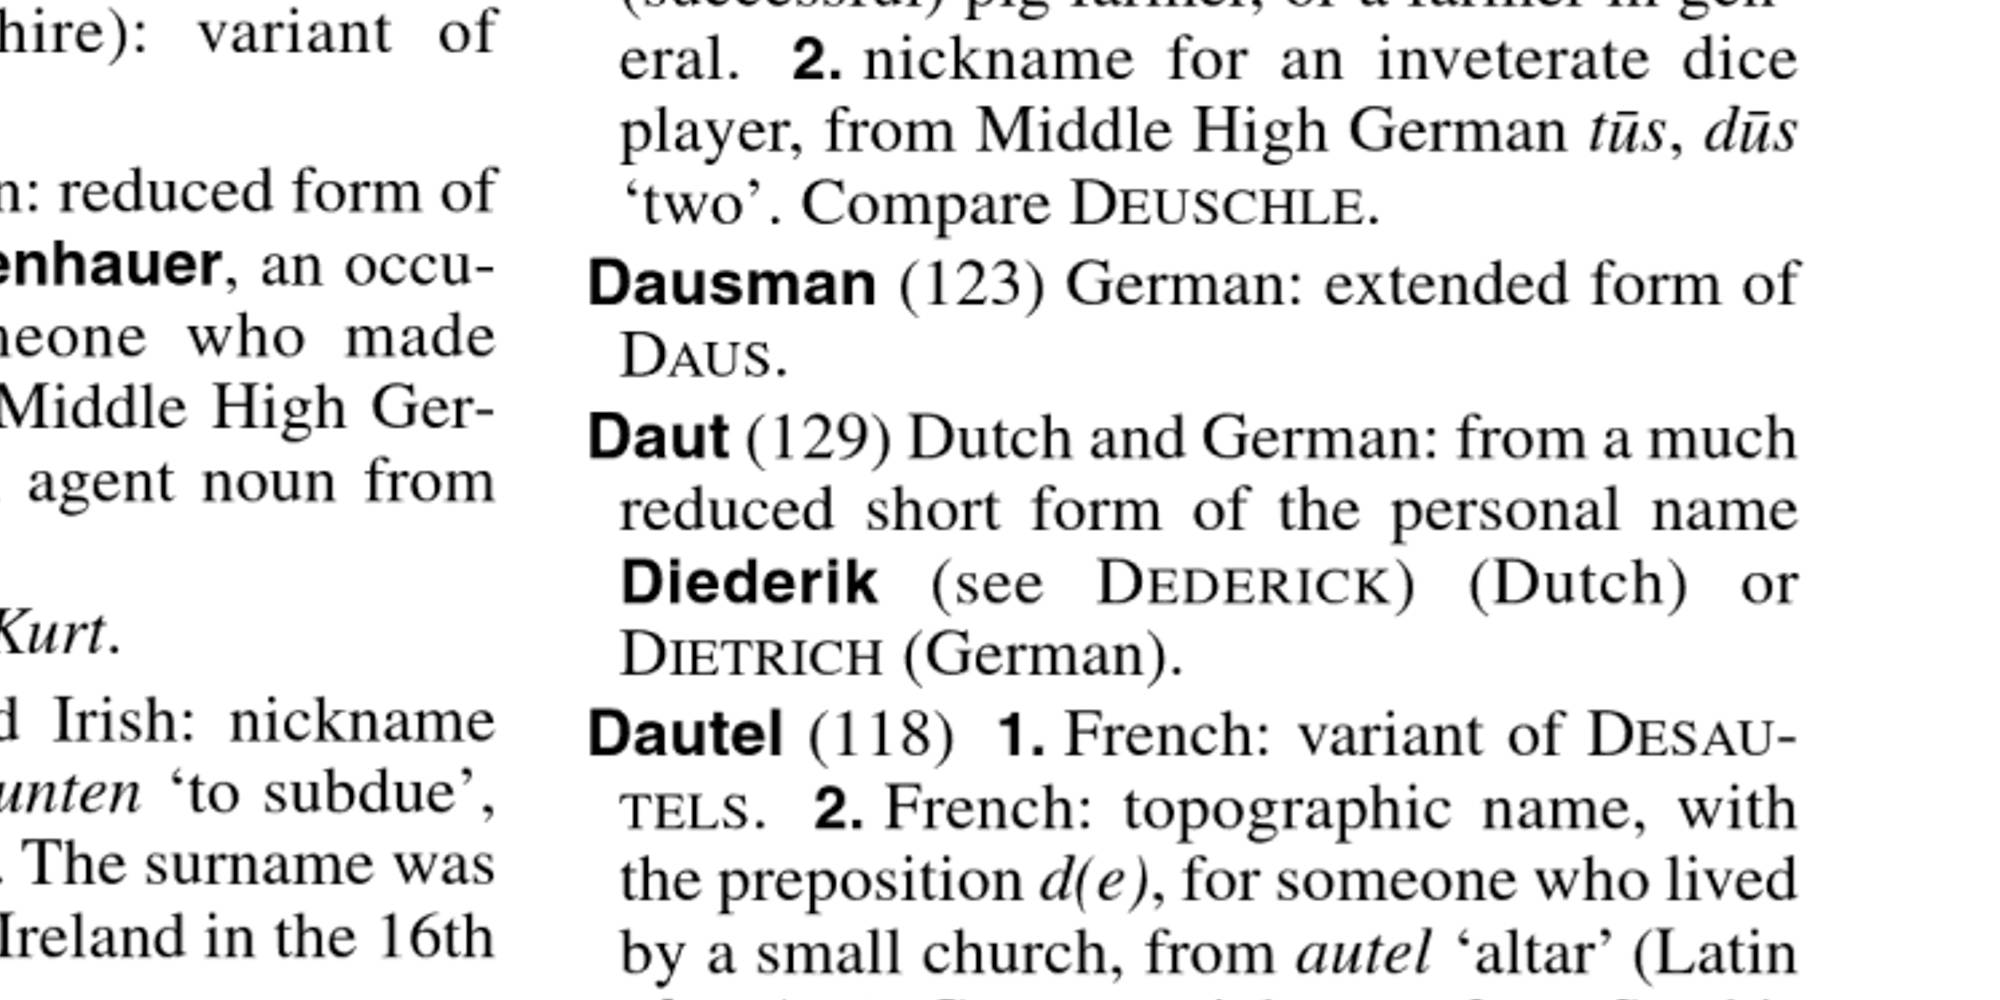 Dauth Family Archive - 2003 - Hanks-Patrick - Dictionary of American Family Names - Volume Set - Daut